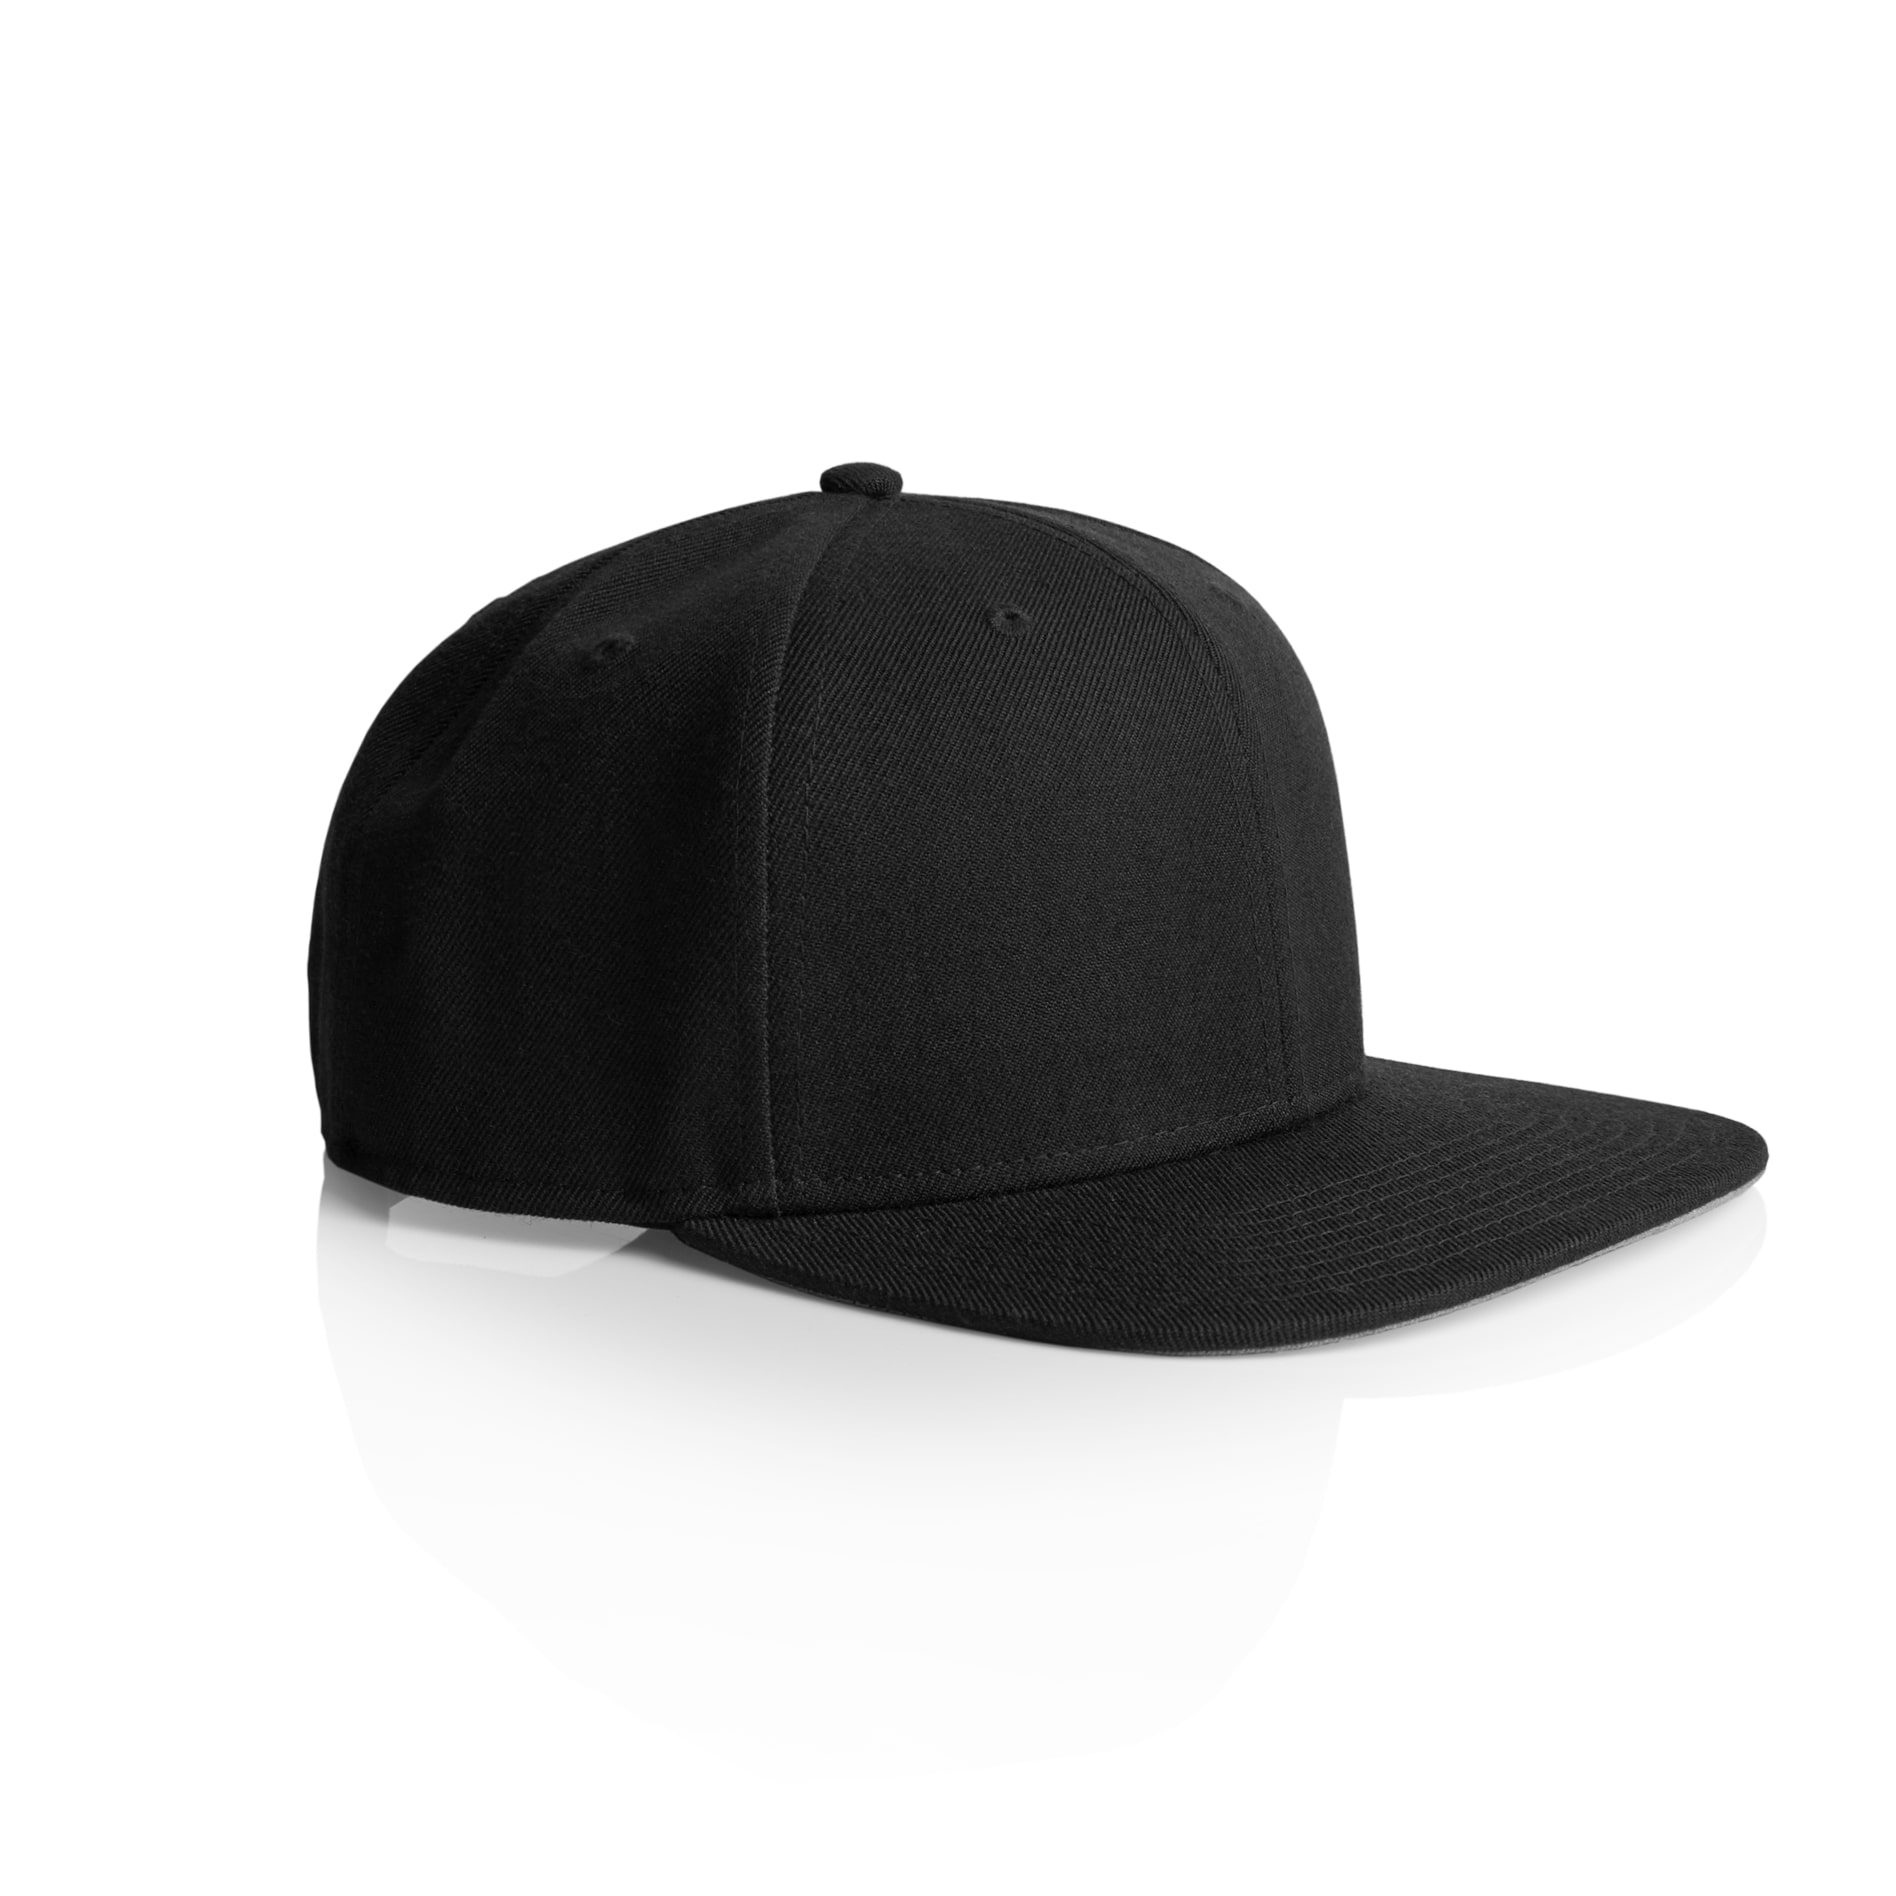 5 best caps to personalise - 1100 stock cap black